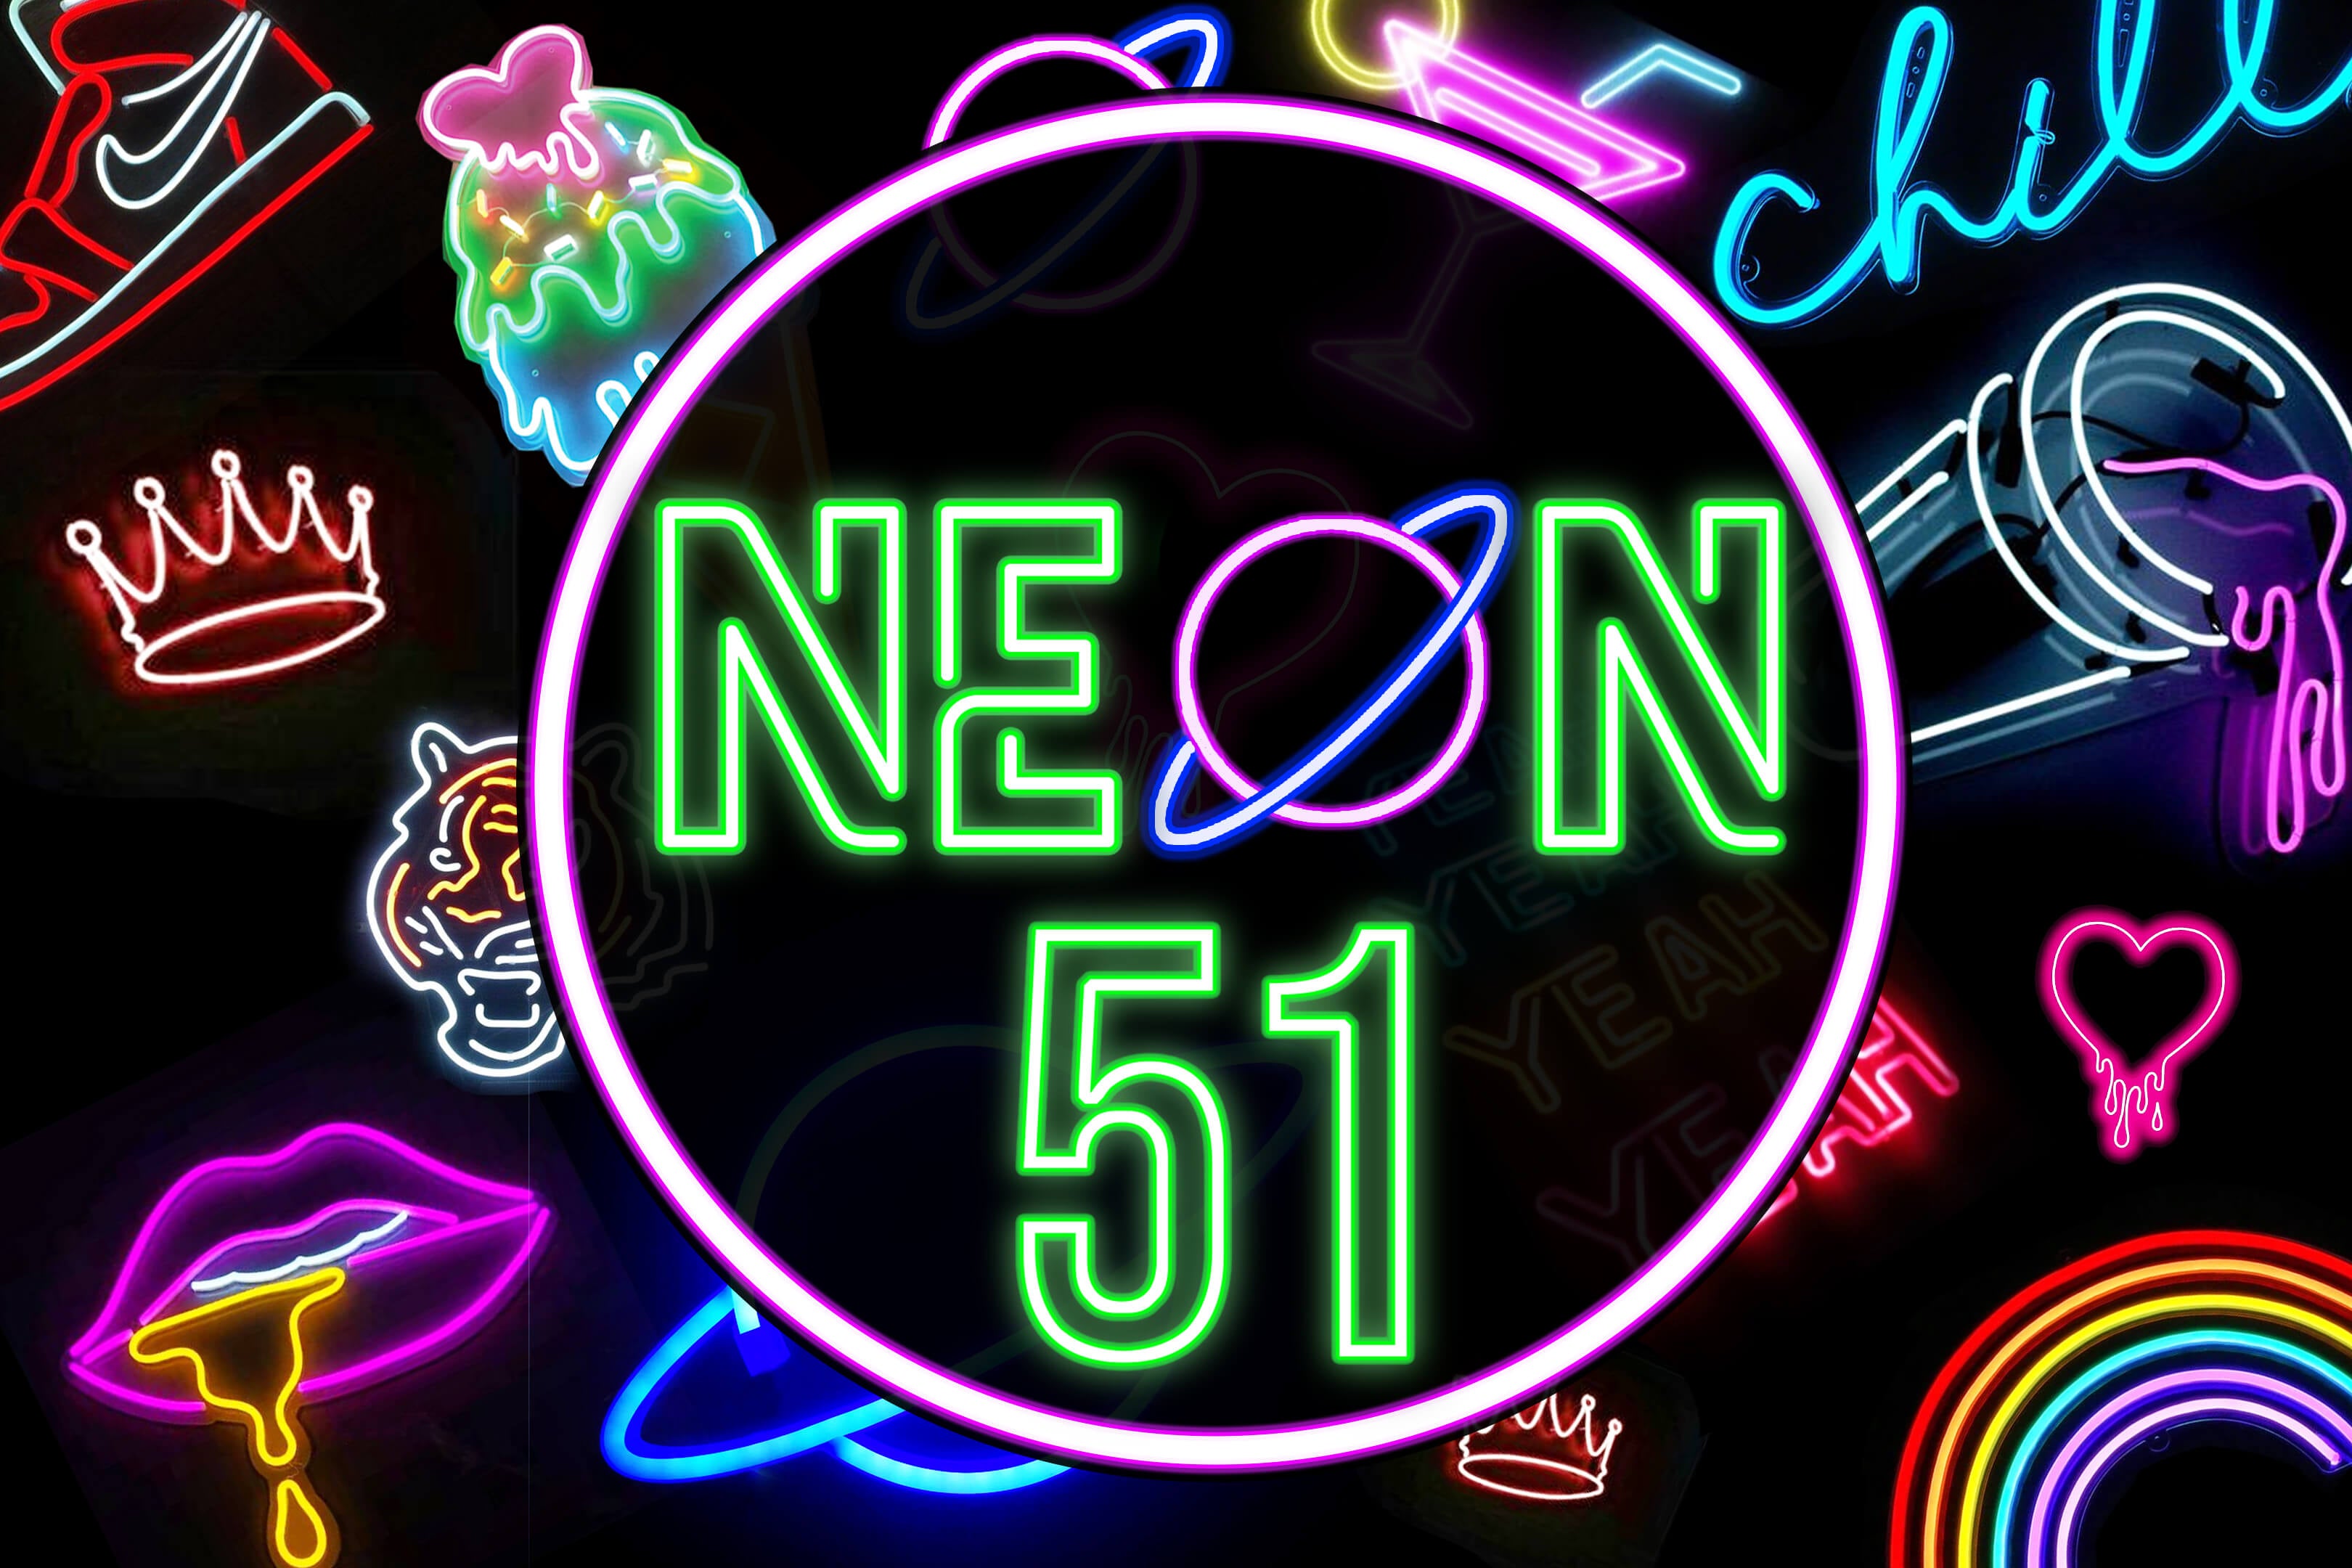 Carregar vídeo: Vídeo corporativo para página do produto - Neon51